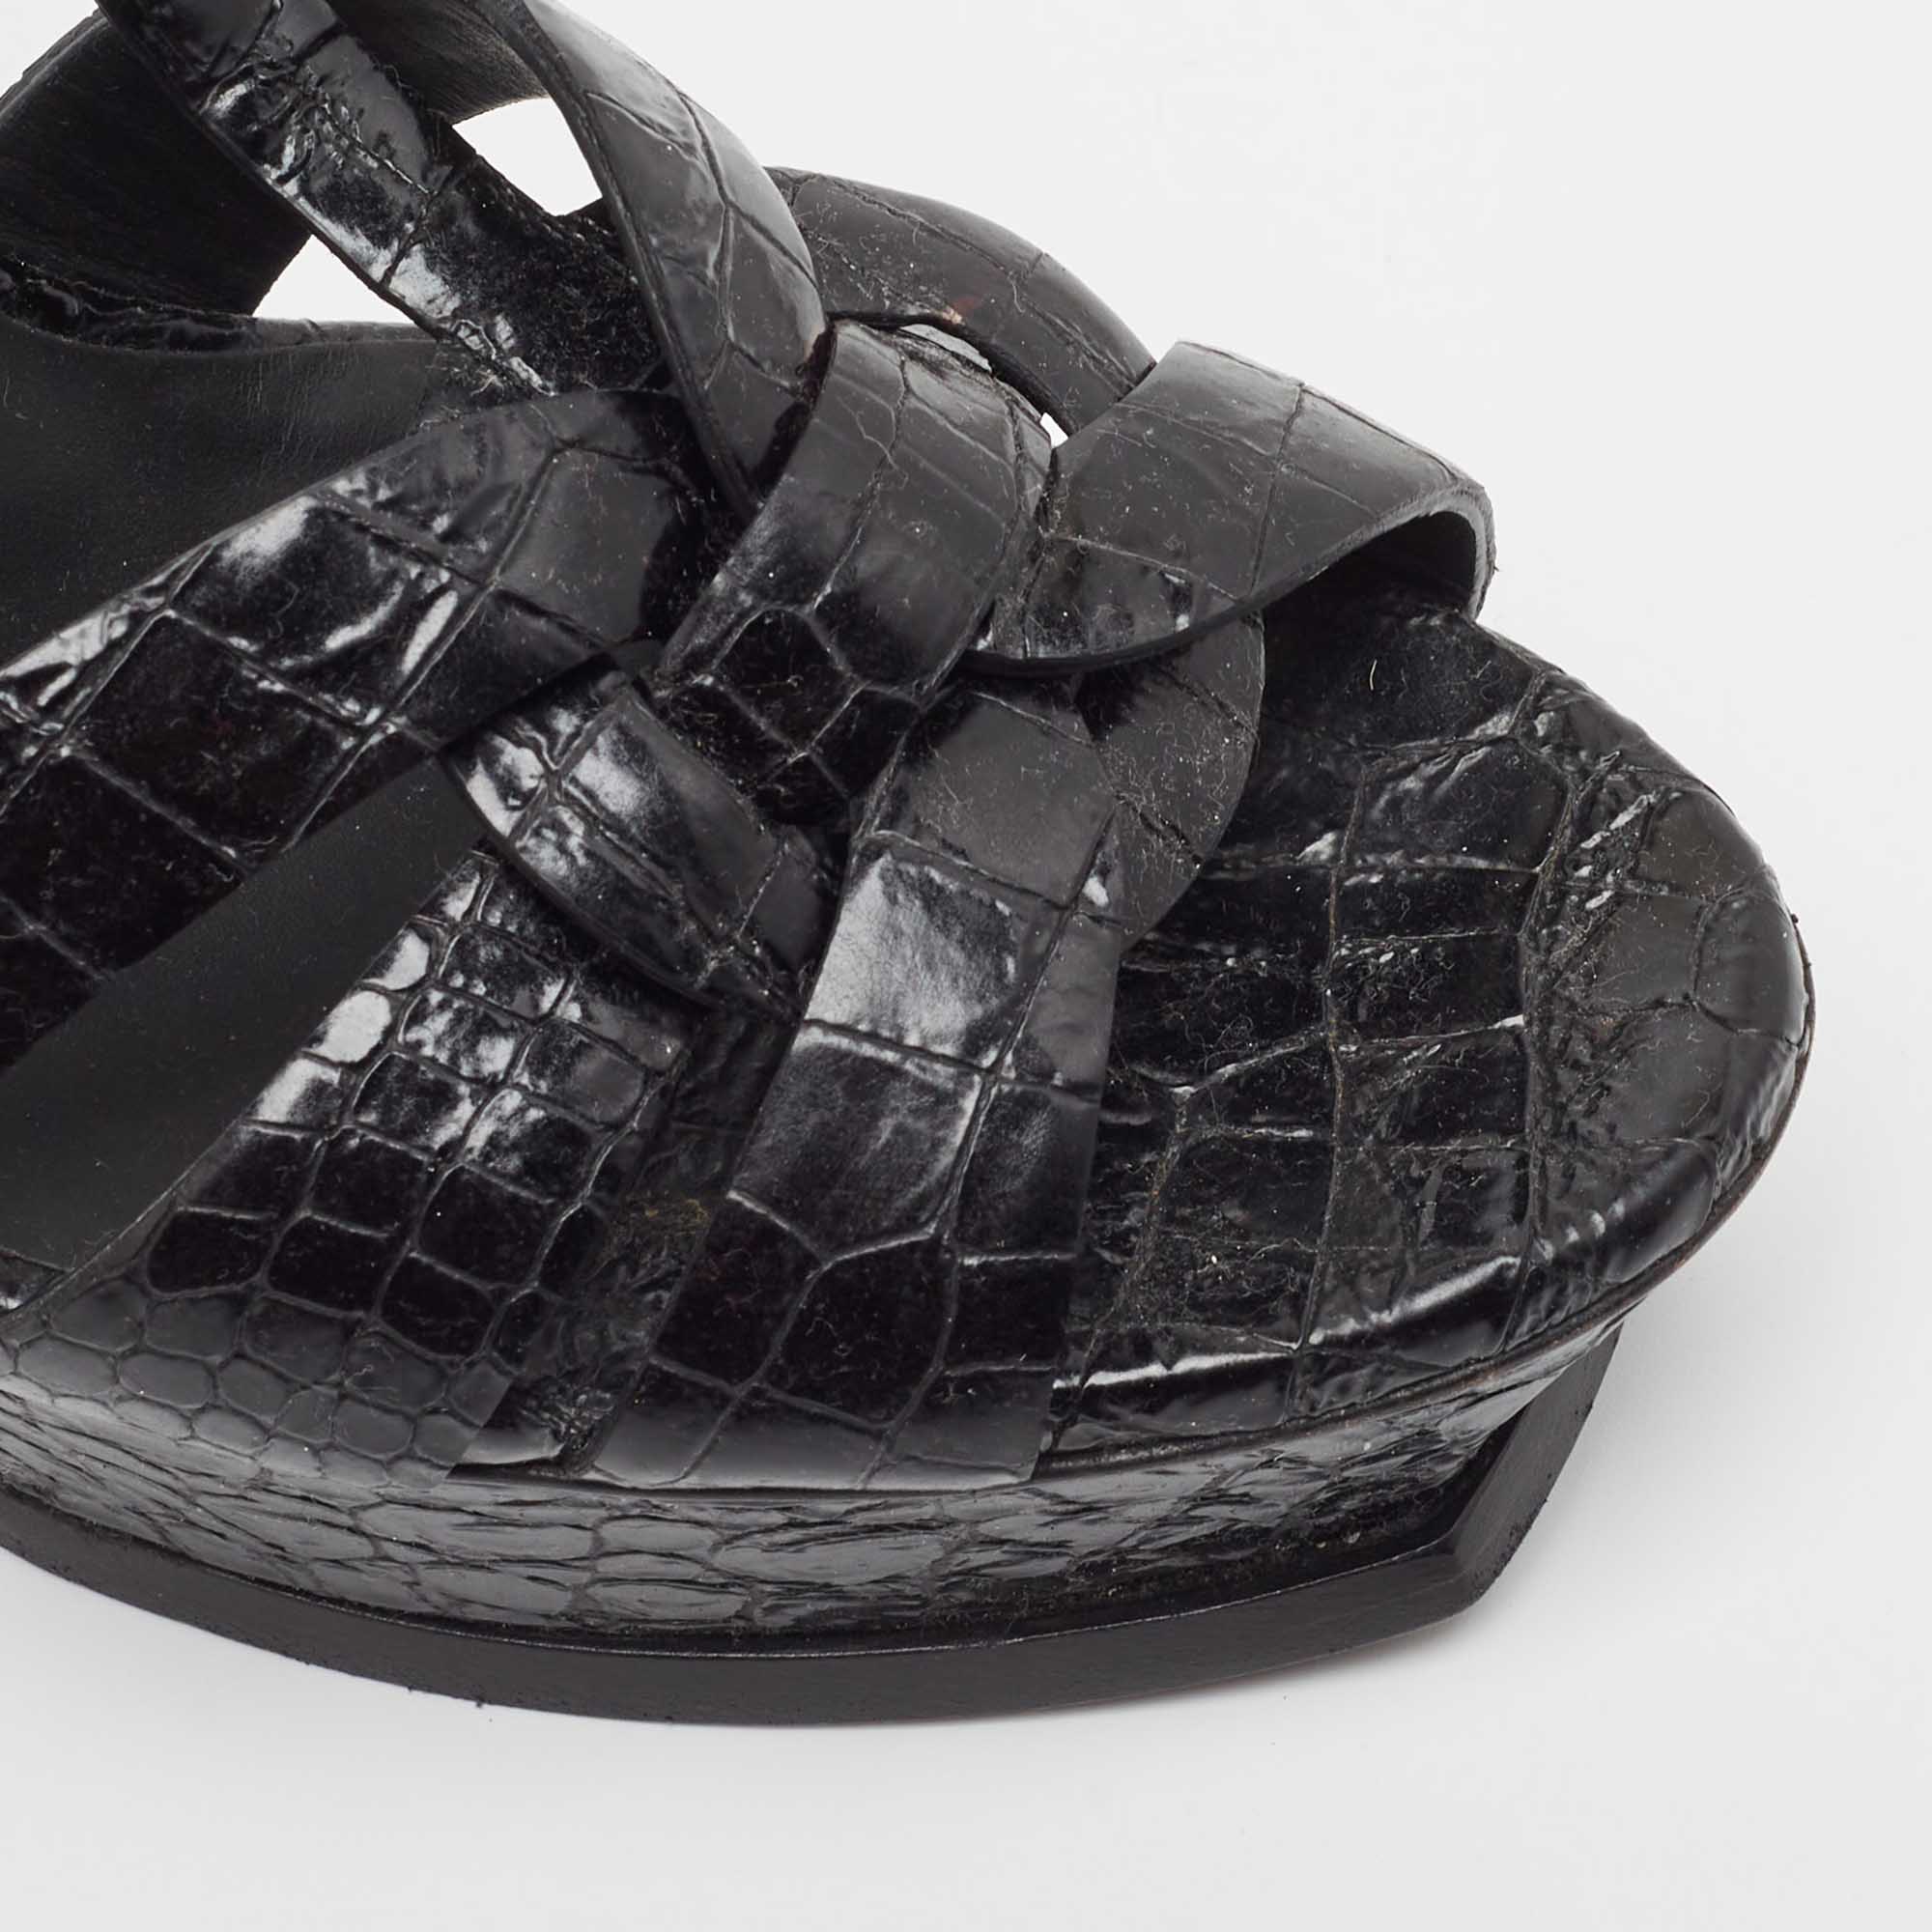 Saint Laurent Black Python Embossed Leather Tribute Sandals Size 40